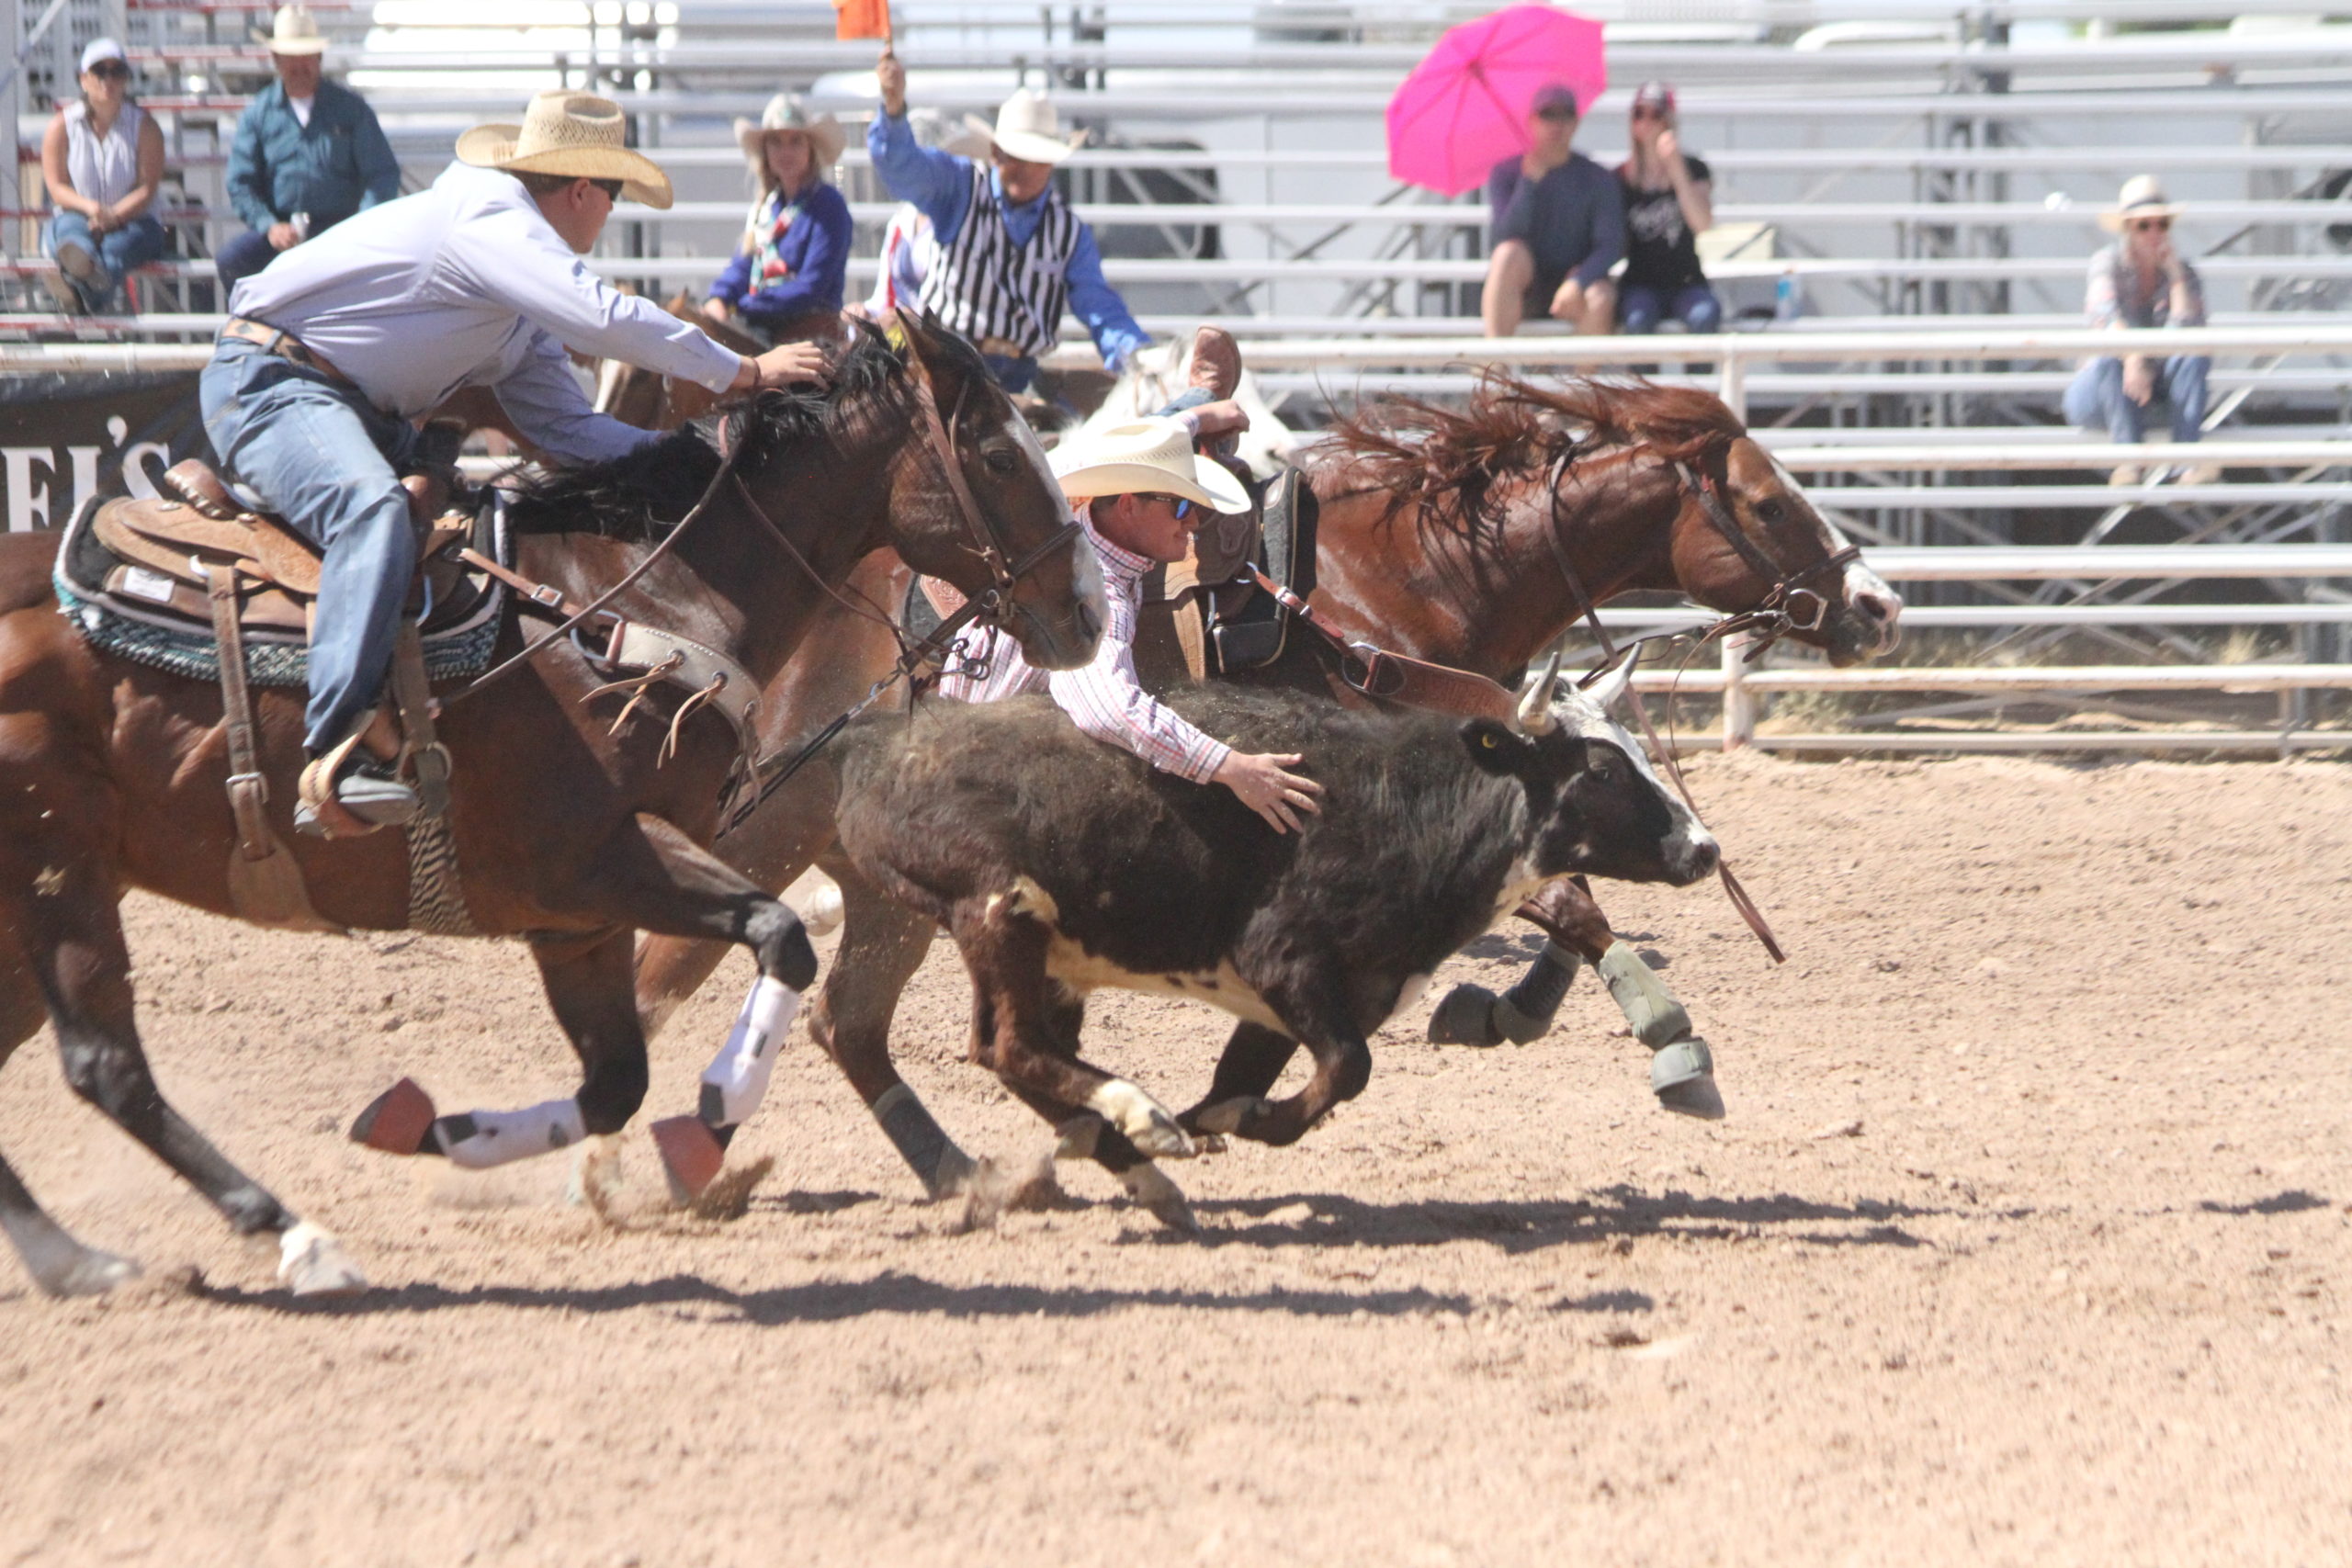 77th Annual Yuma Silver Spur Rodeo 2022 - Cowboy Lifestyle Network